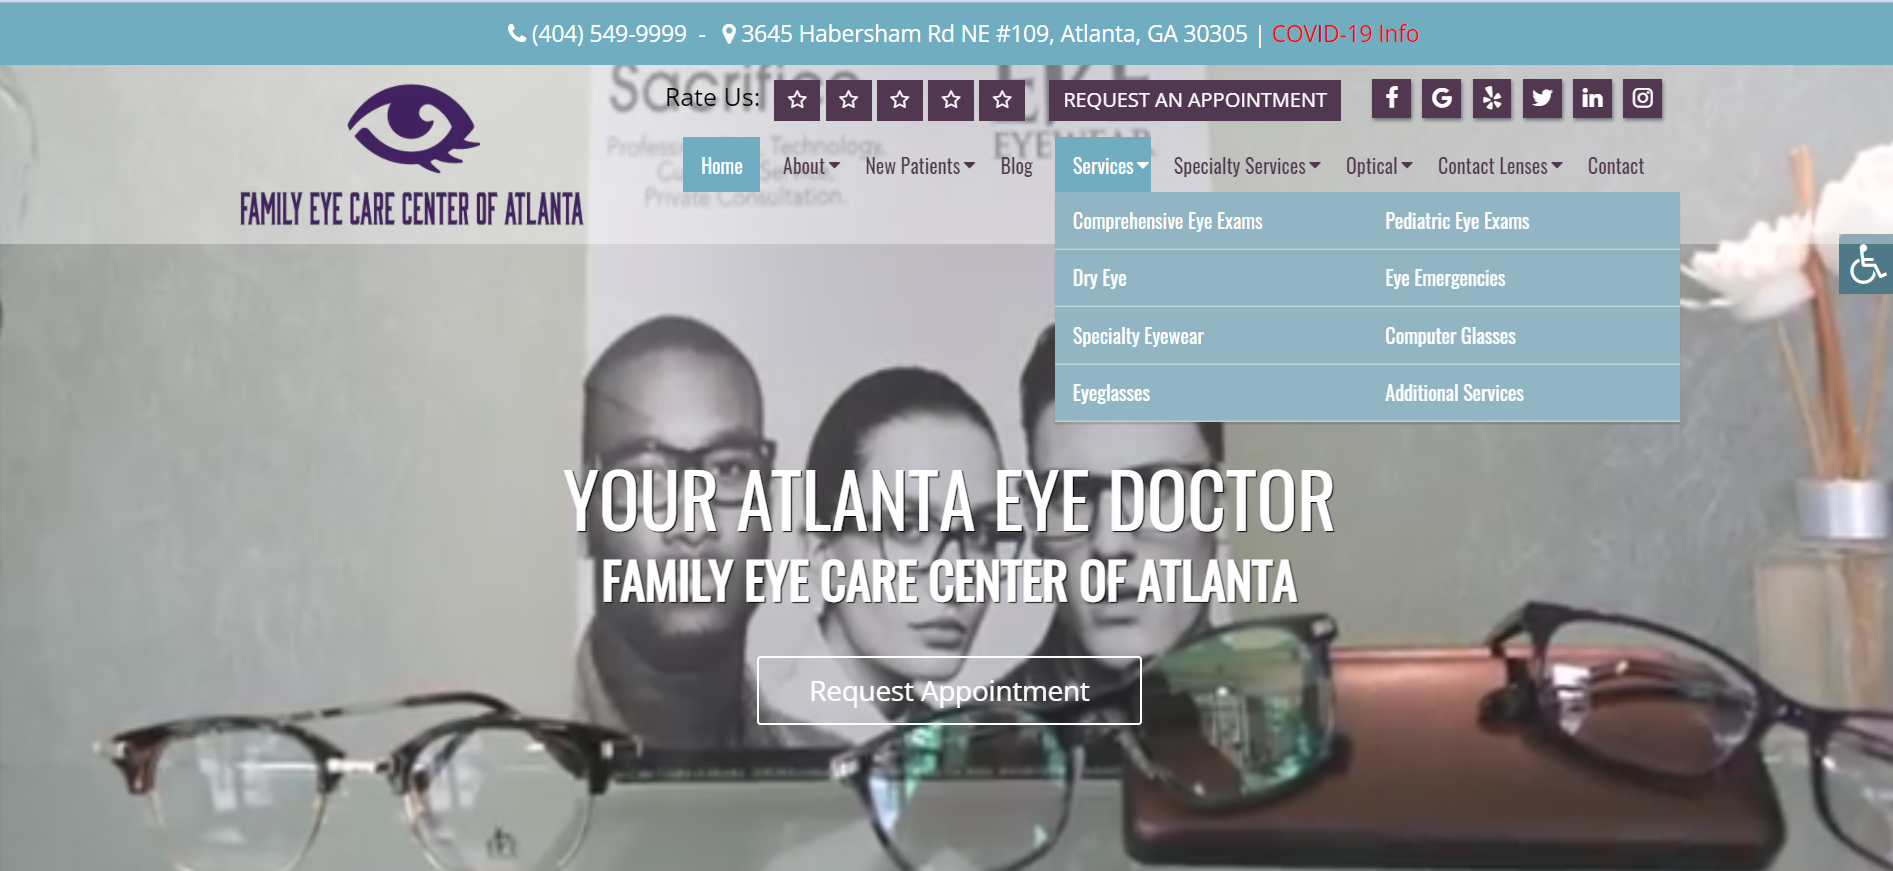 organized healthcare website